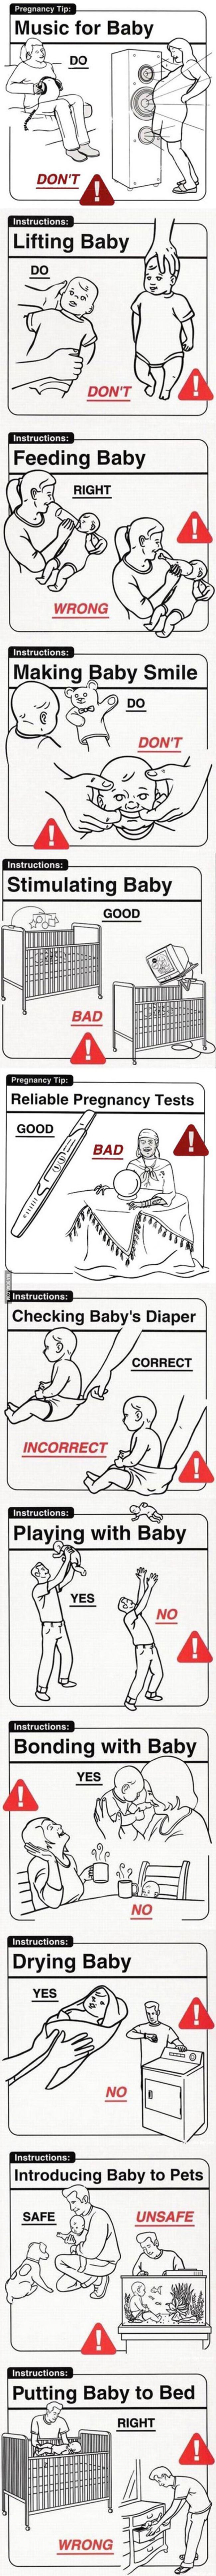 Baby Advice